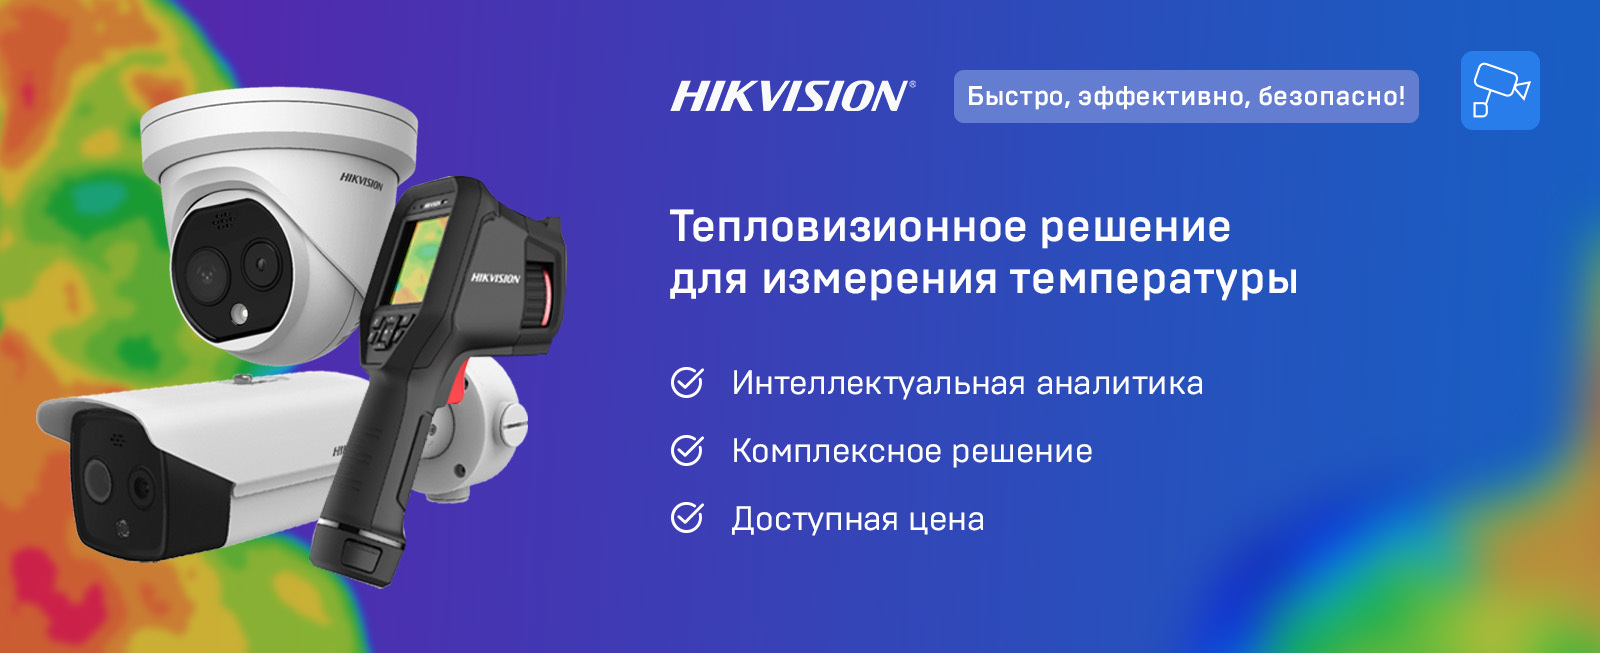 Новинка! Тепловизионные камеры Hikvision доступны к заказу